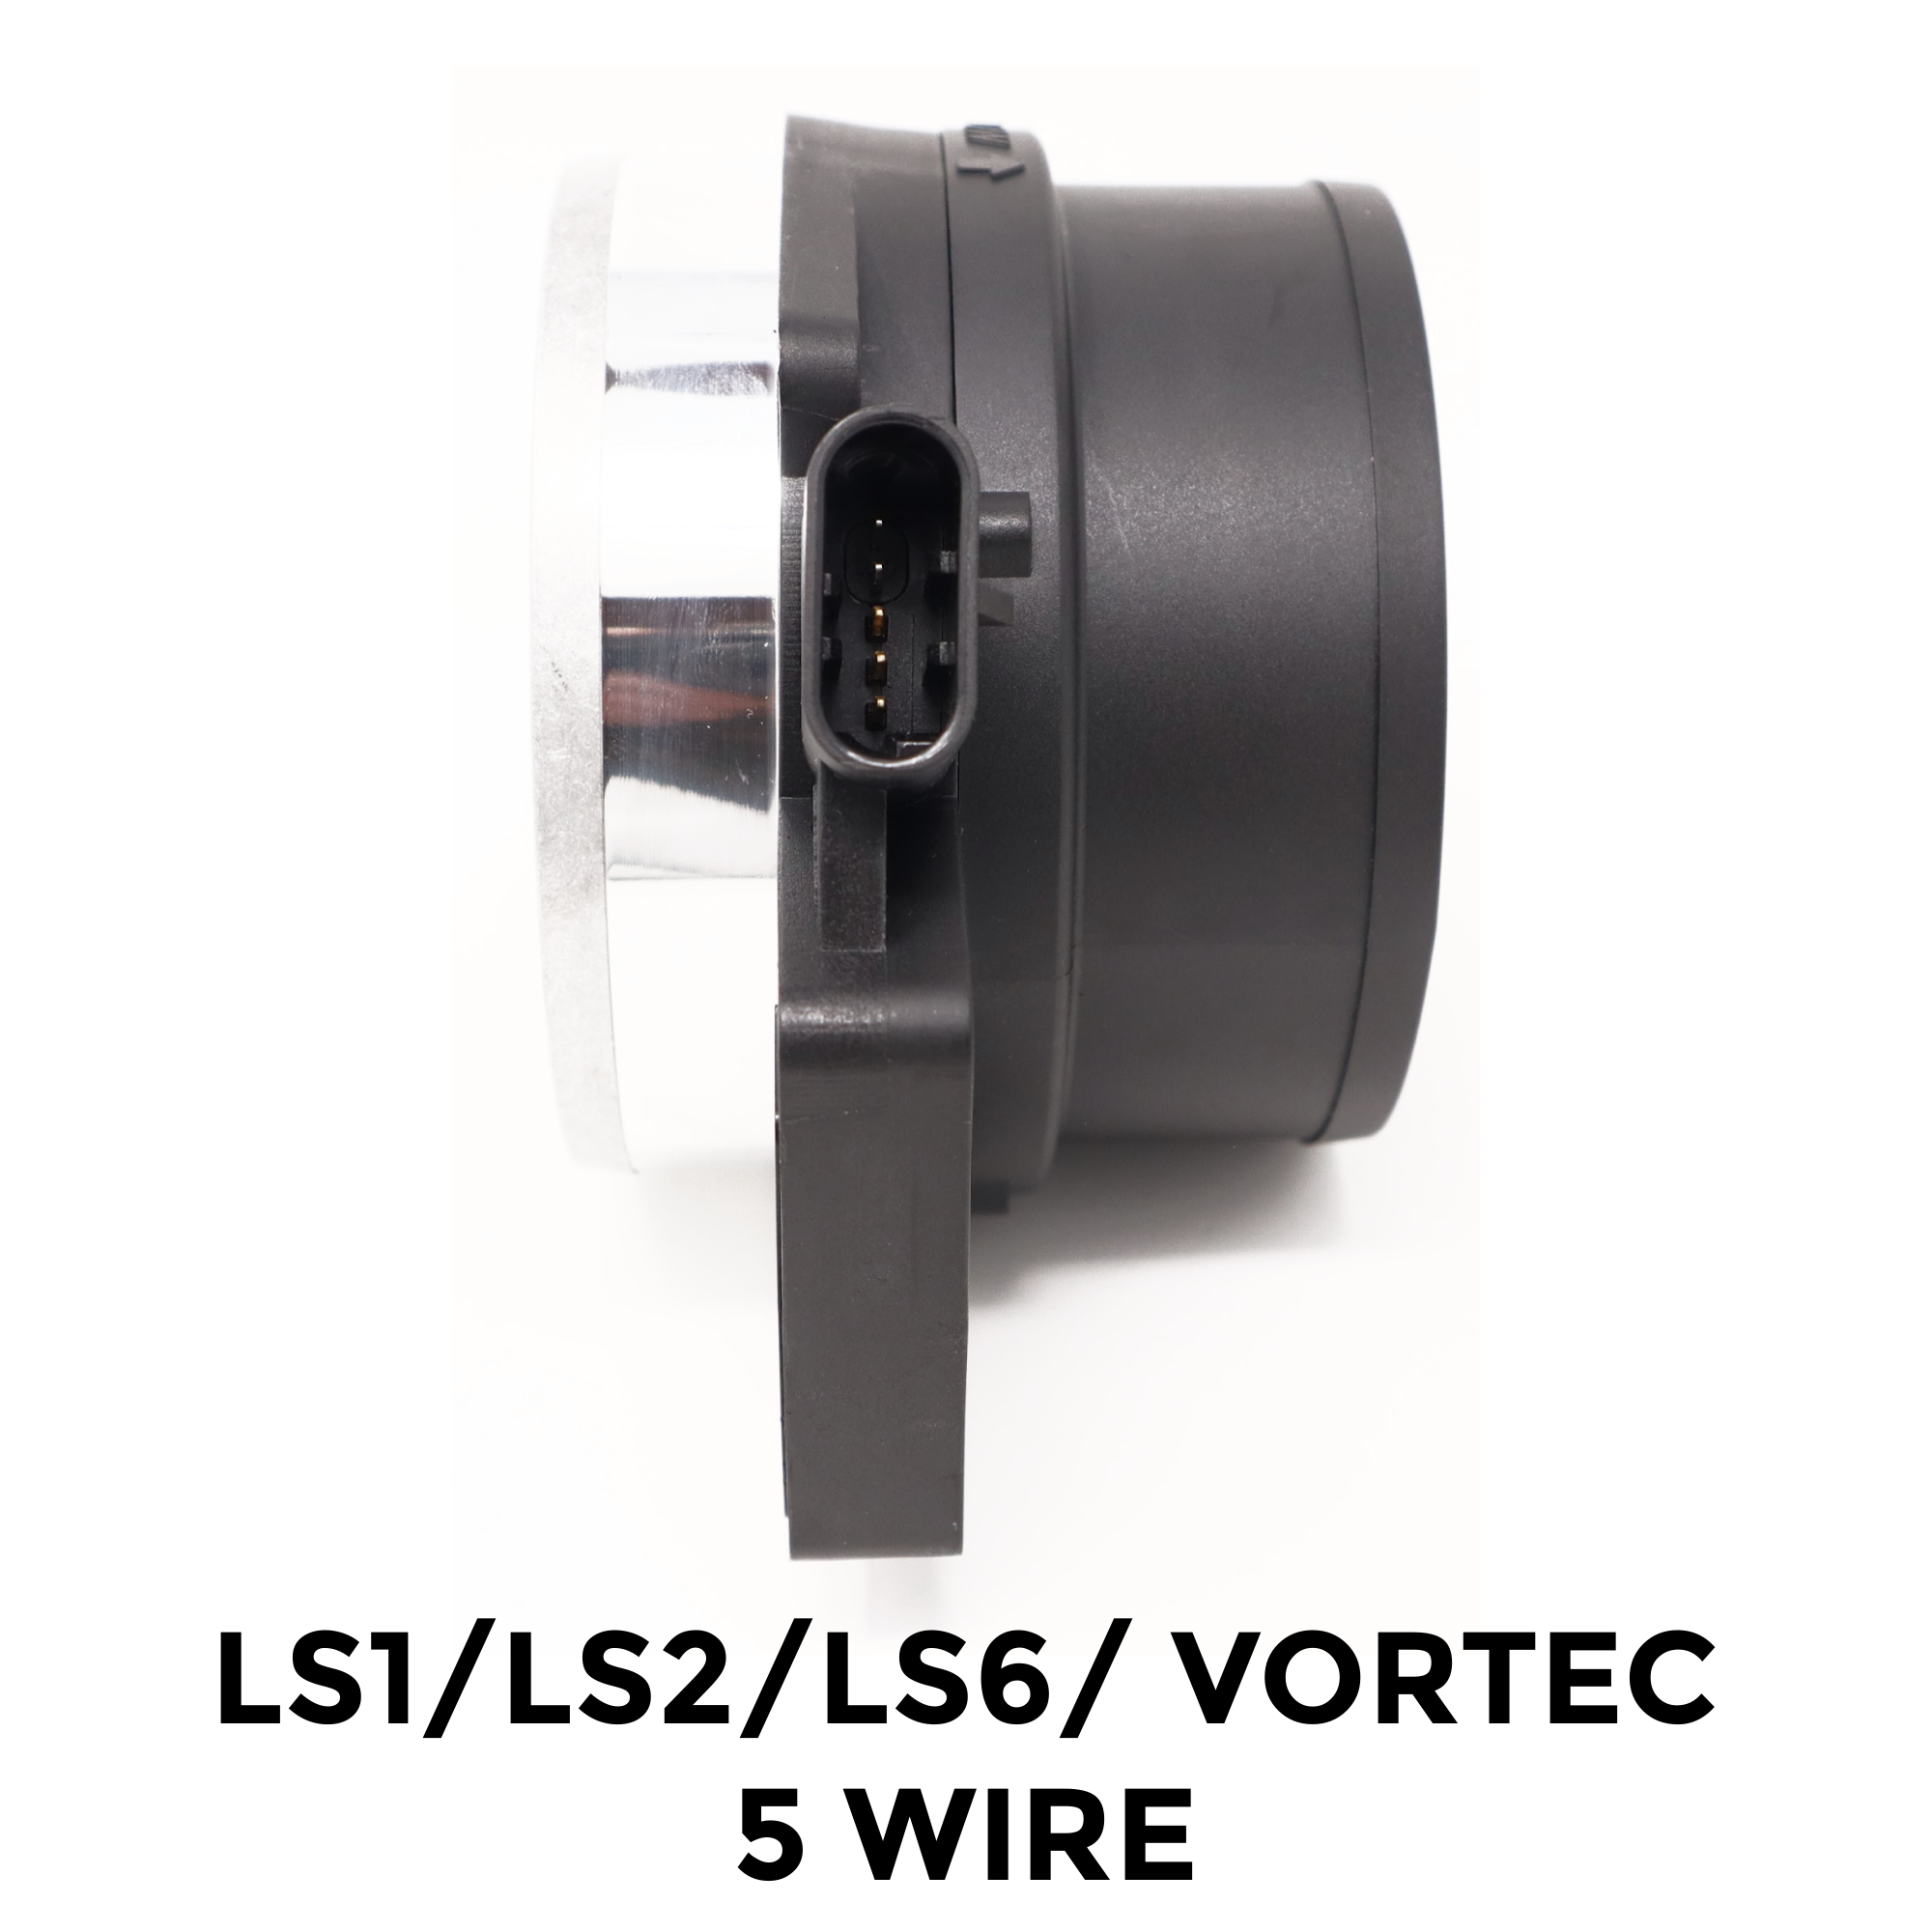 Vortec/LS6/LS2 5 Wire $0.00